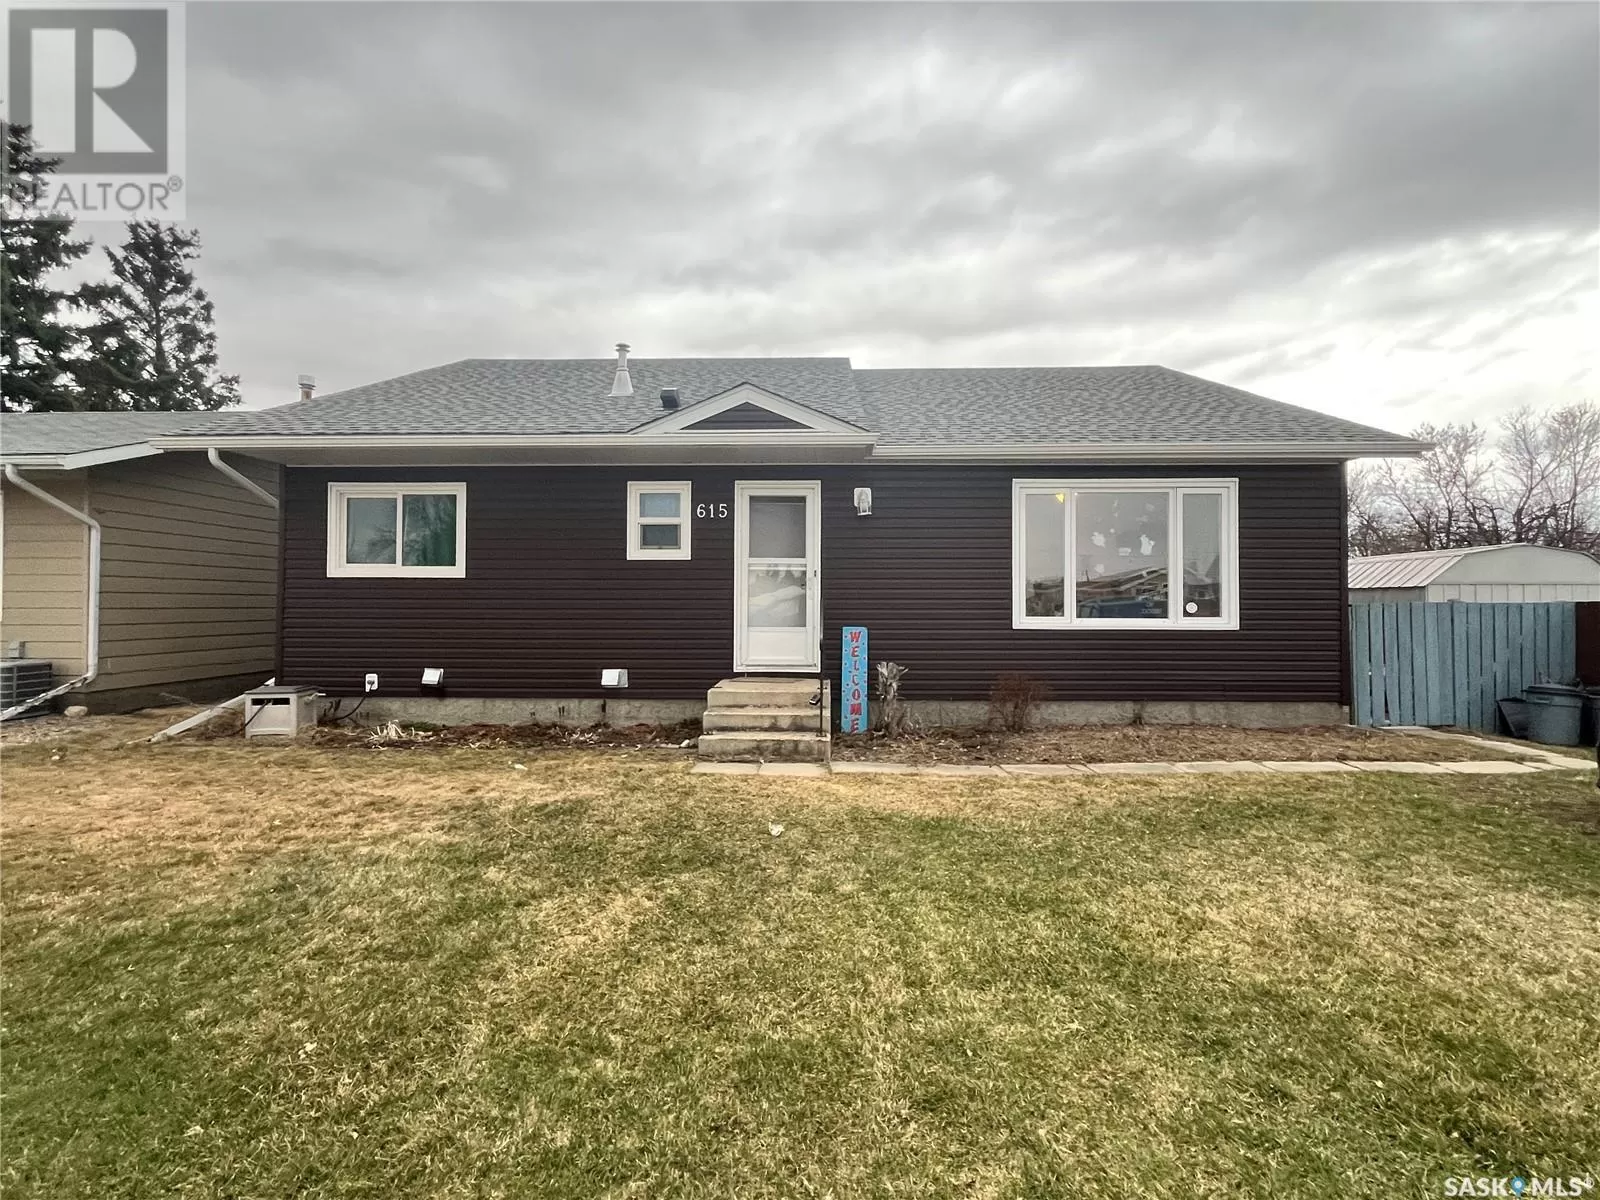 House for rent: 615 1st Avenue S, Bruno, Saskatchewan S0K 0S0